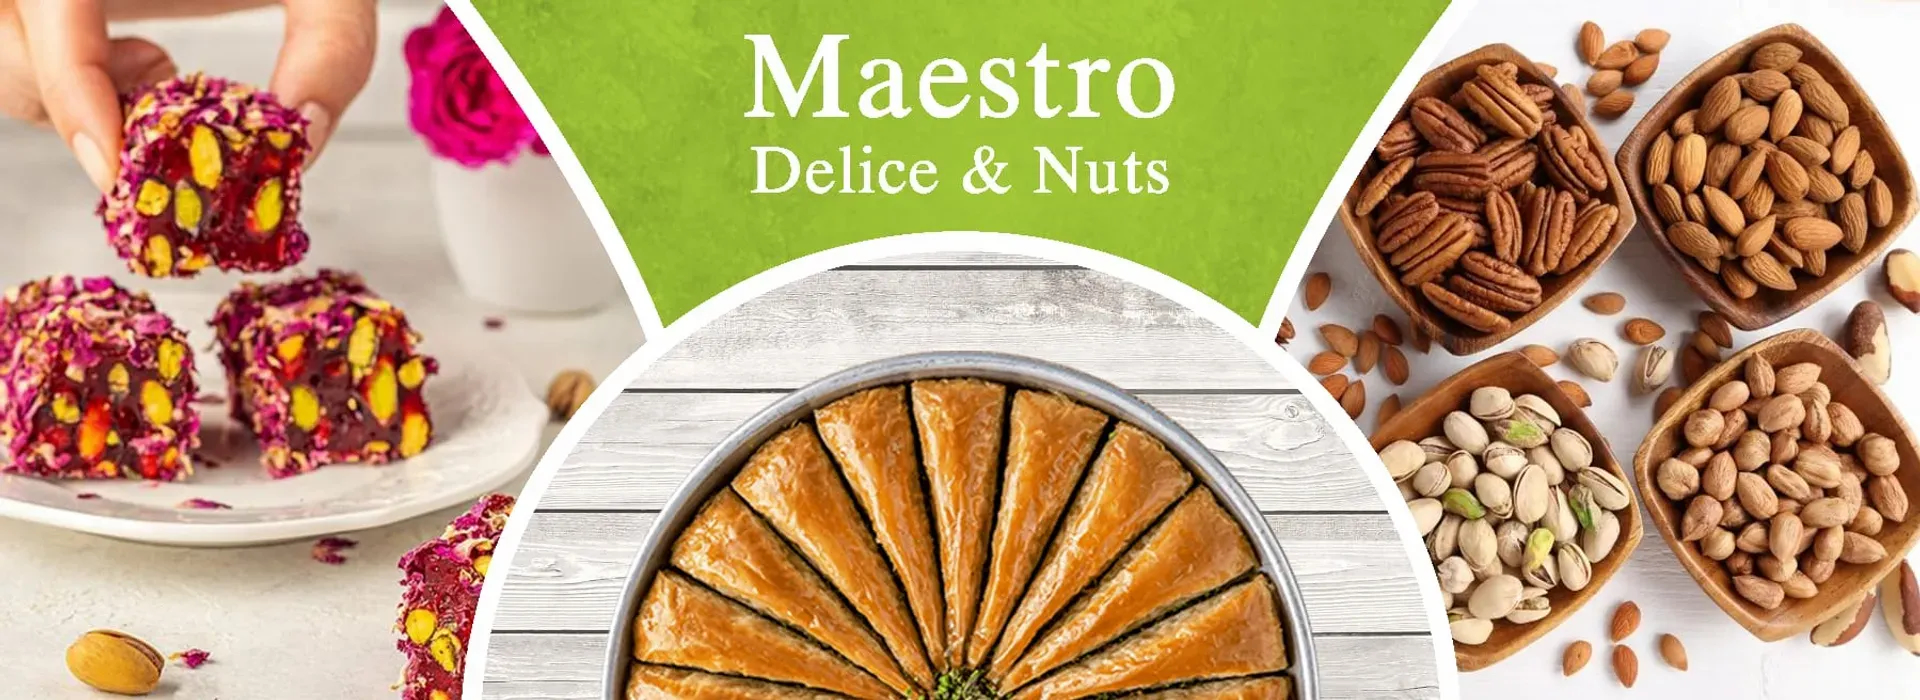 Maestro Delice and Nuts